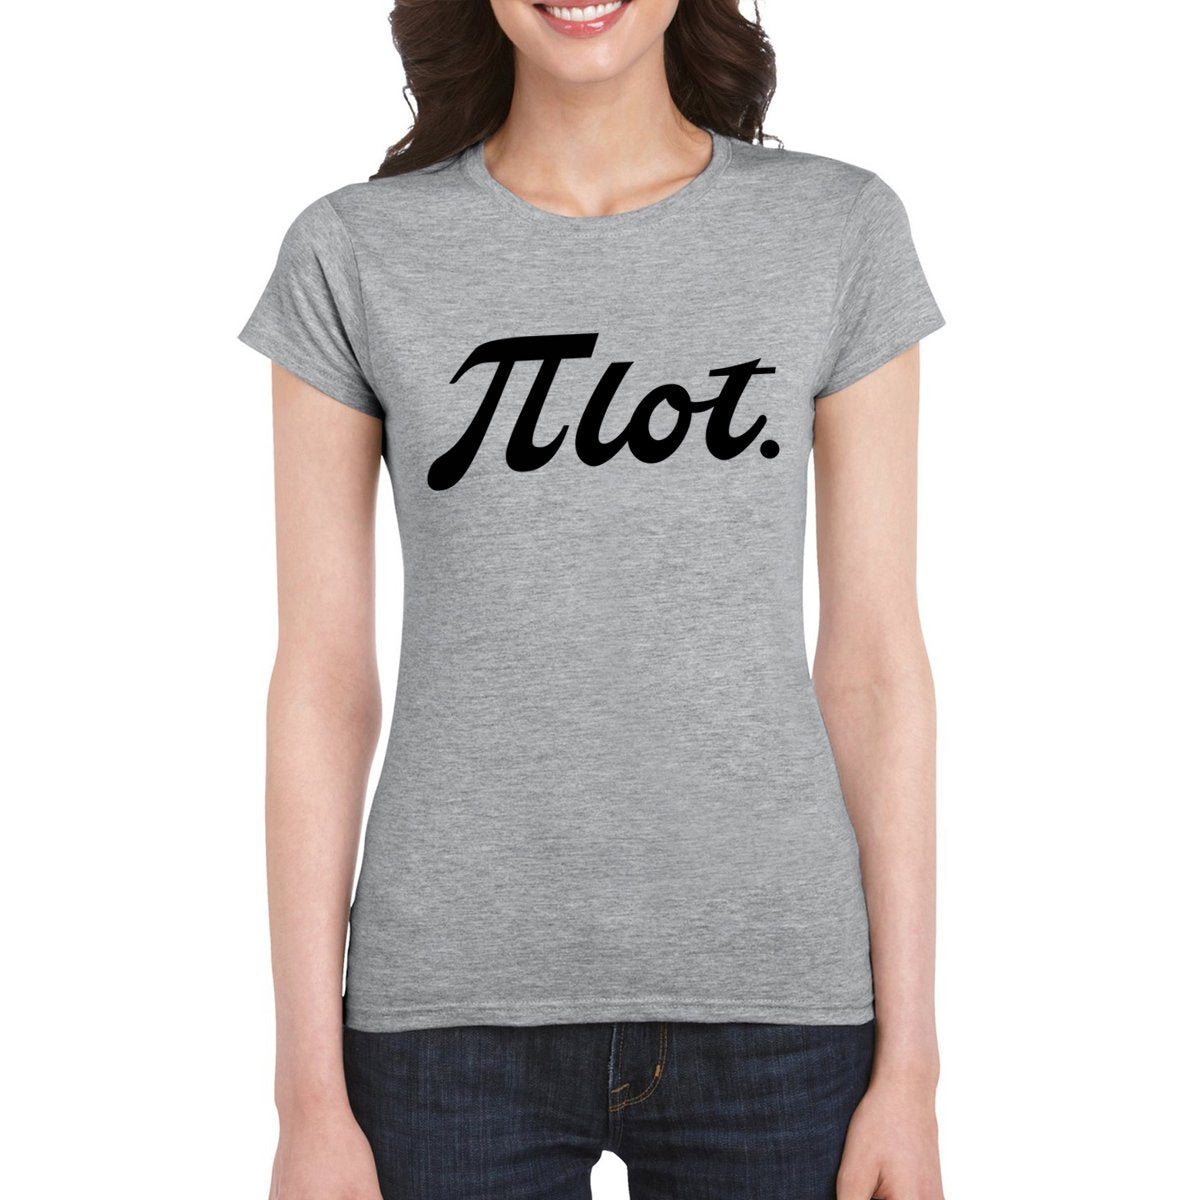 PI-LOT Women's Semi-Fitted T-Shirt